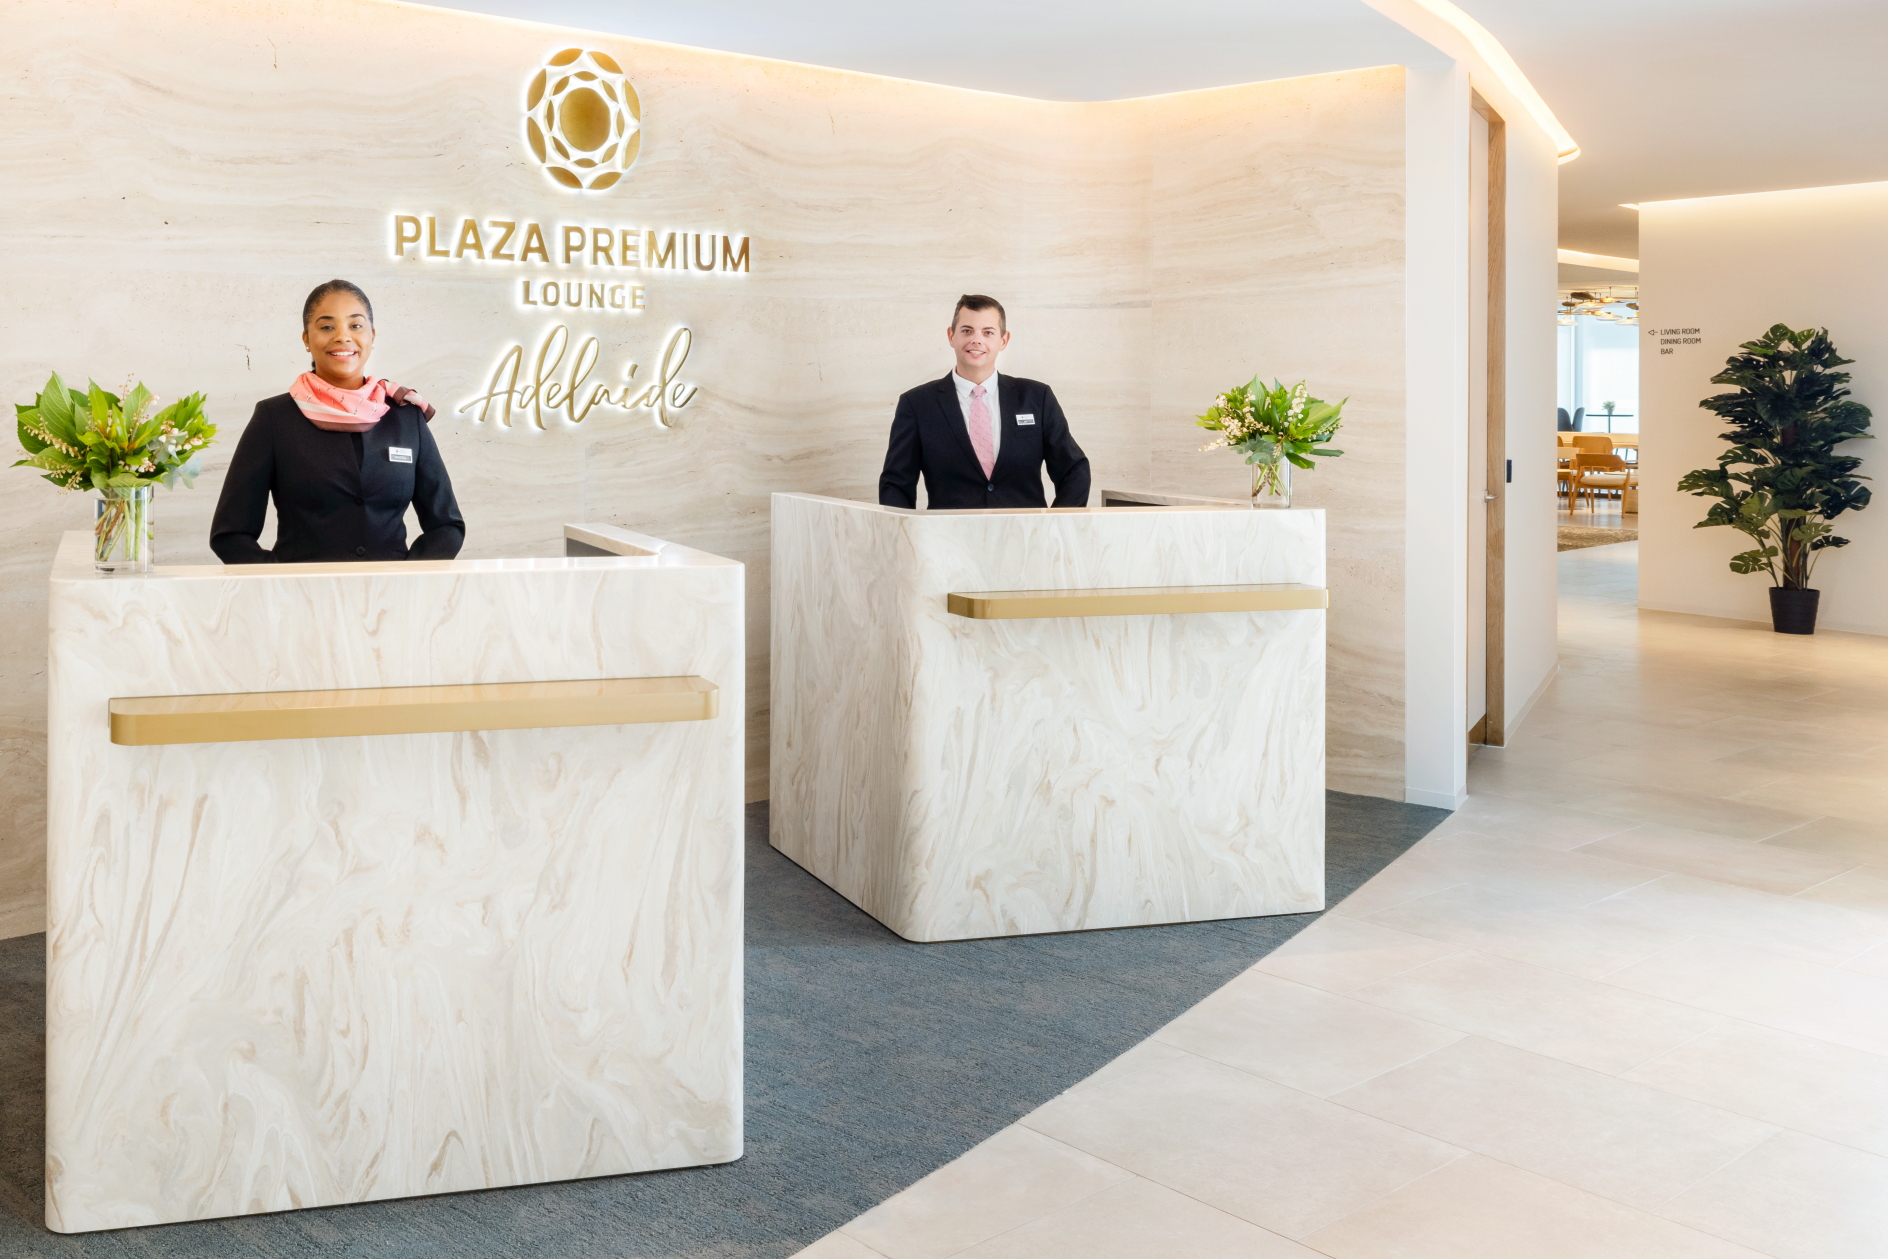 Plaza Premium Lounge Adelaide. Click to enlarge.